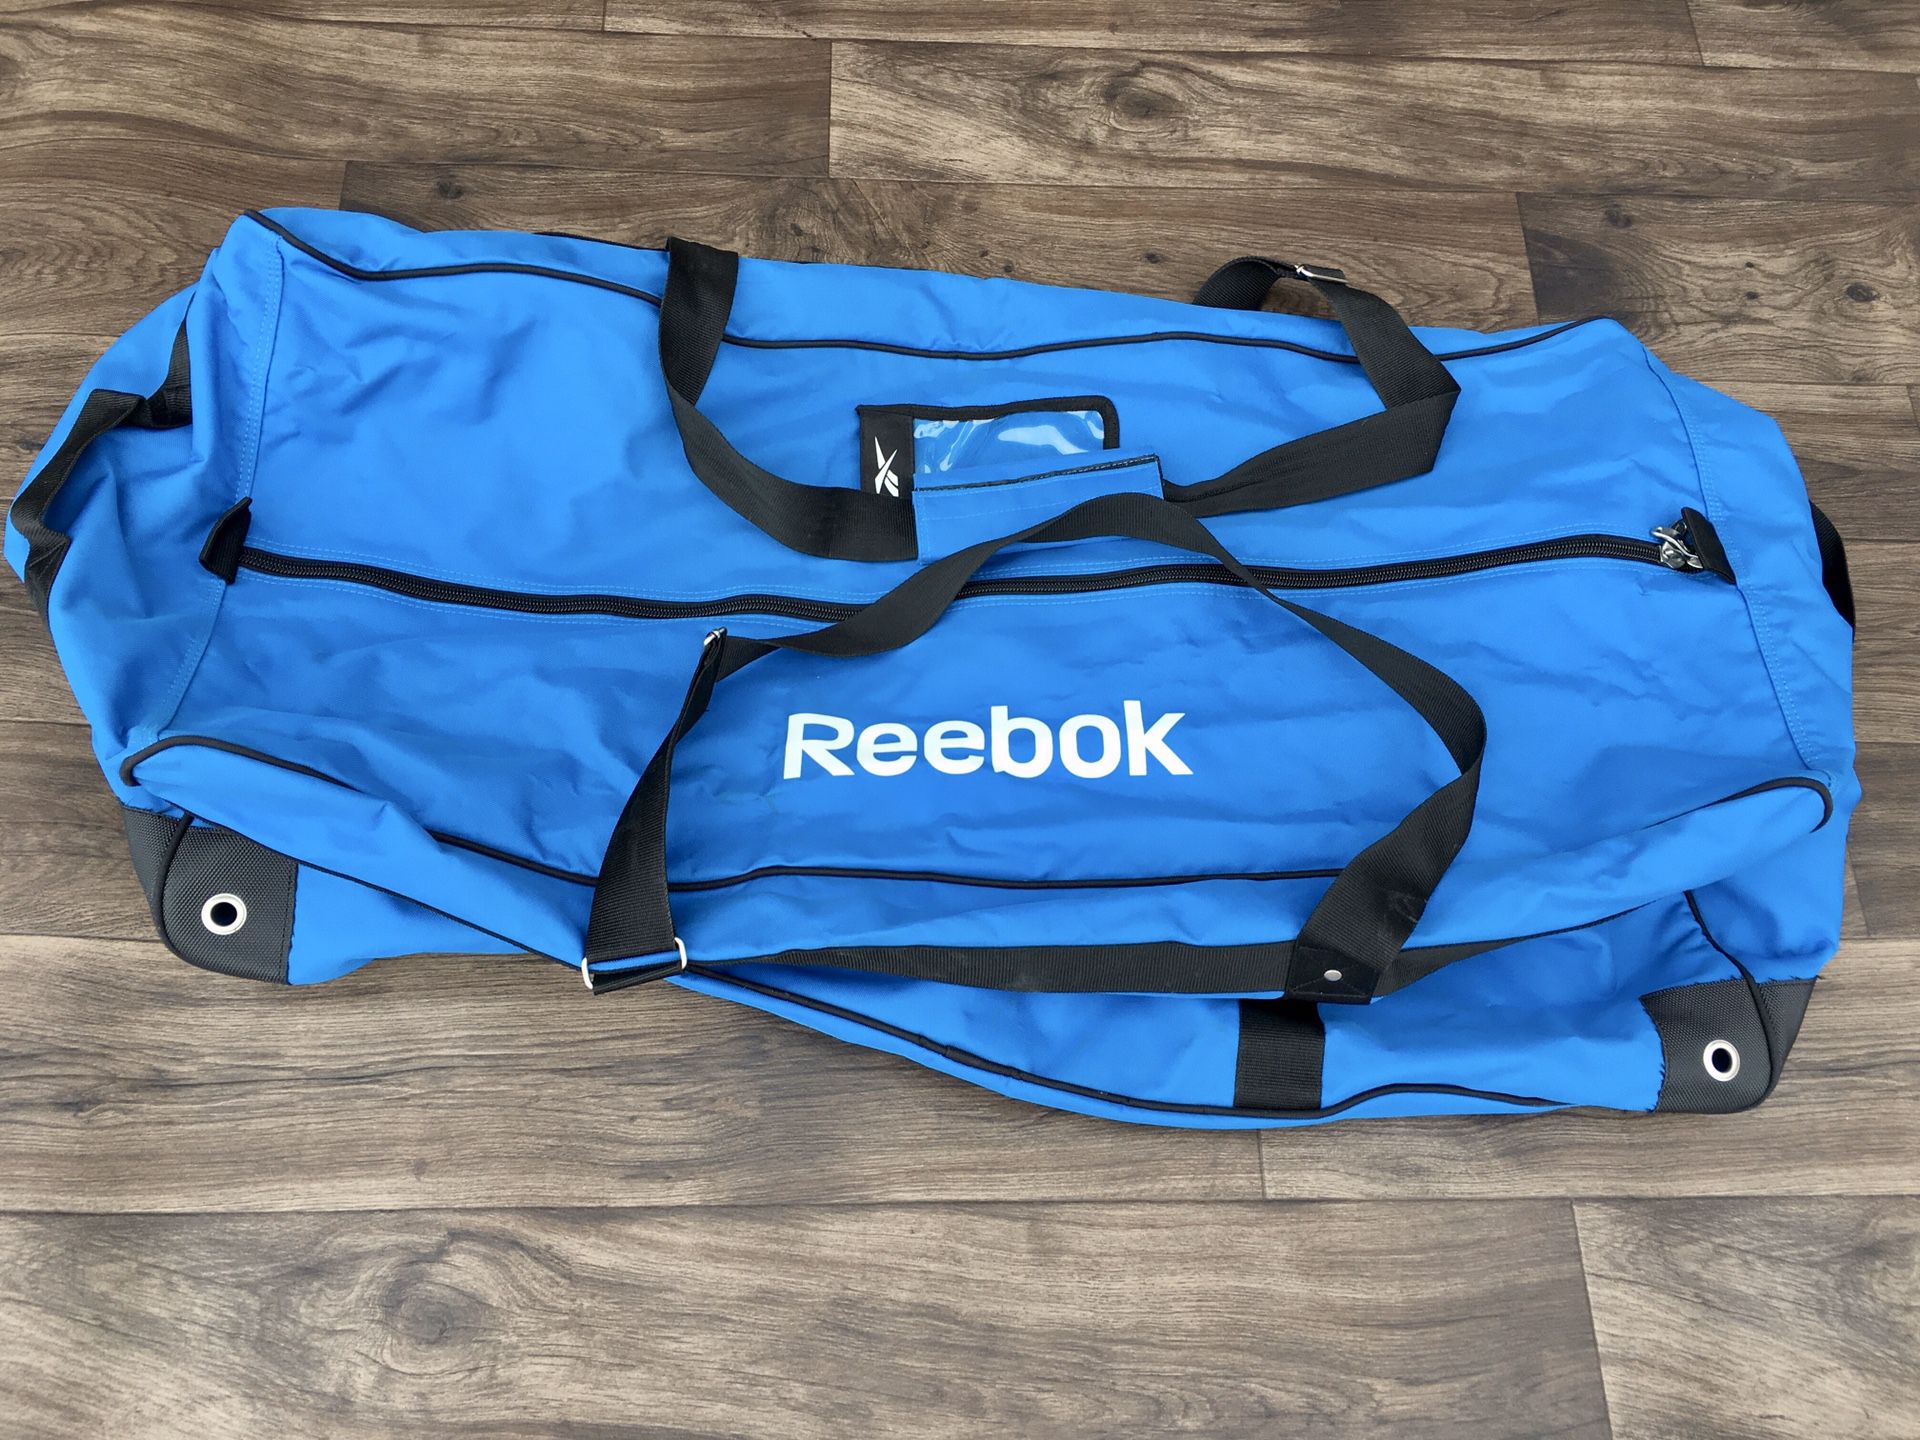 Reebok Hockey Bag - Large